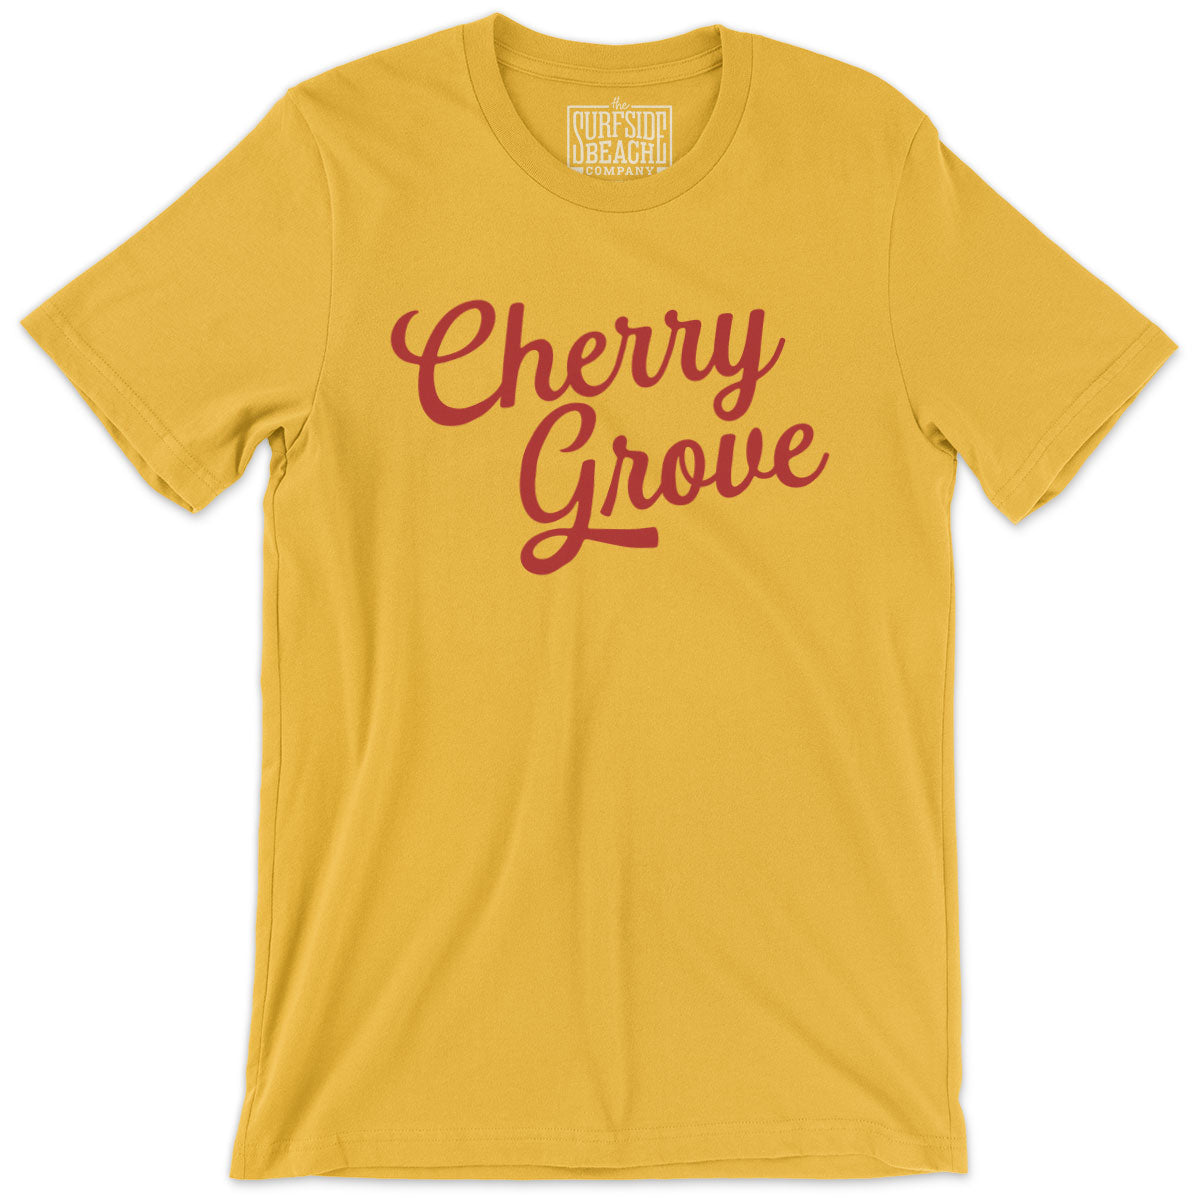 Cherry Grove (Vintage Seaboard) Unisex T-Shirt